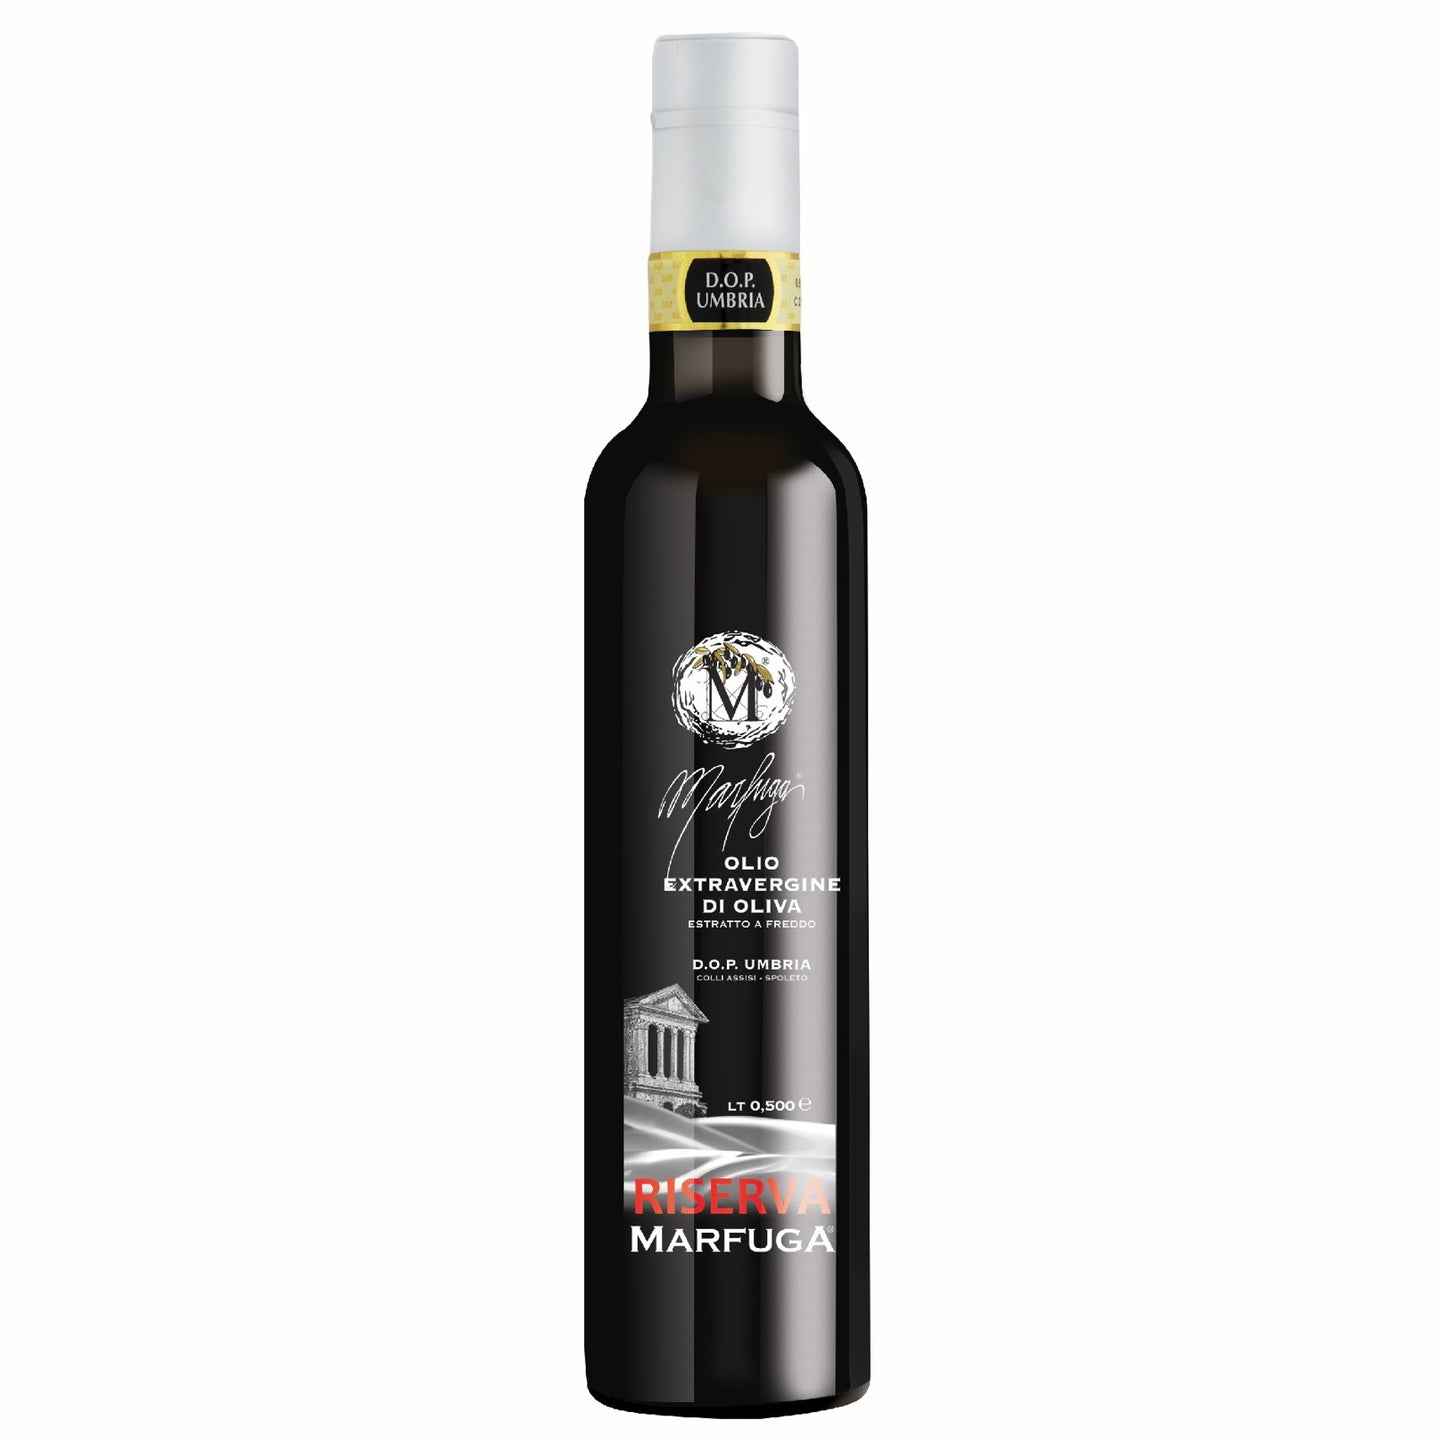 Marfuga Riserva DOP Umbria Extra Virgin Olive Oil 500ml MRG 024